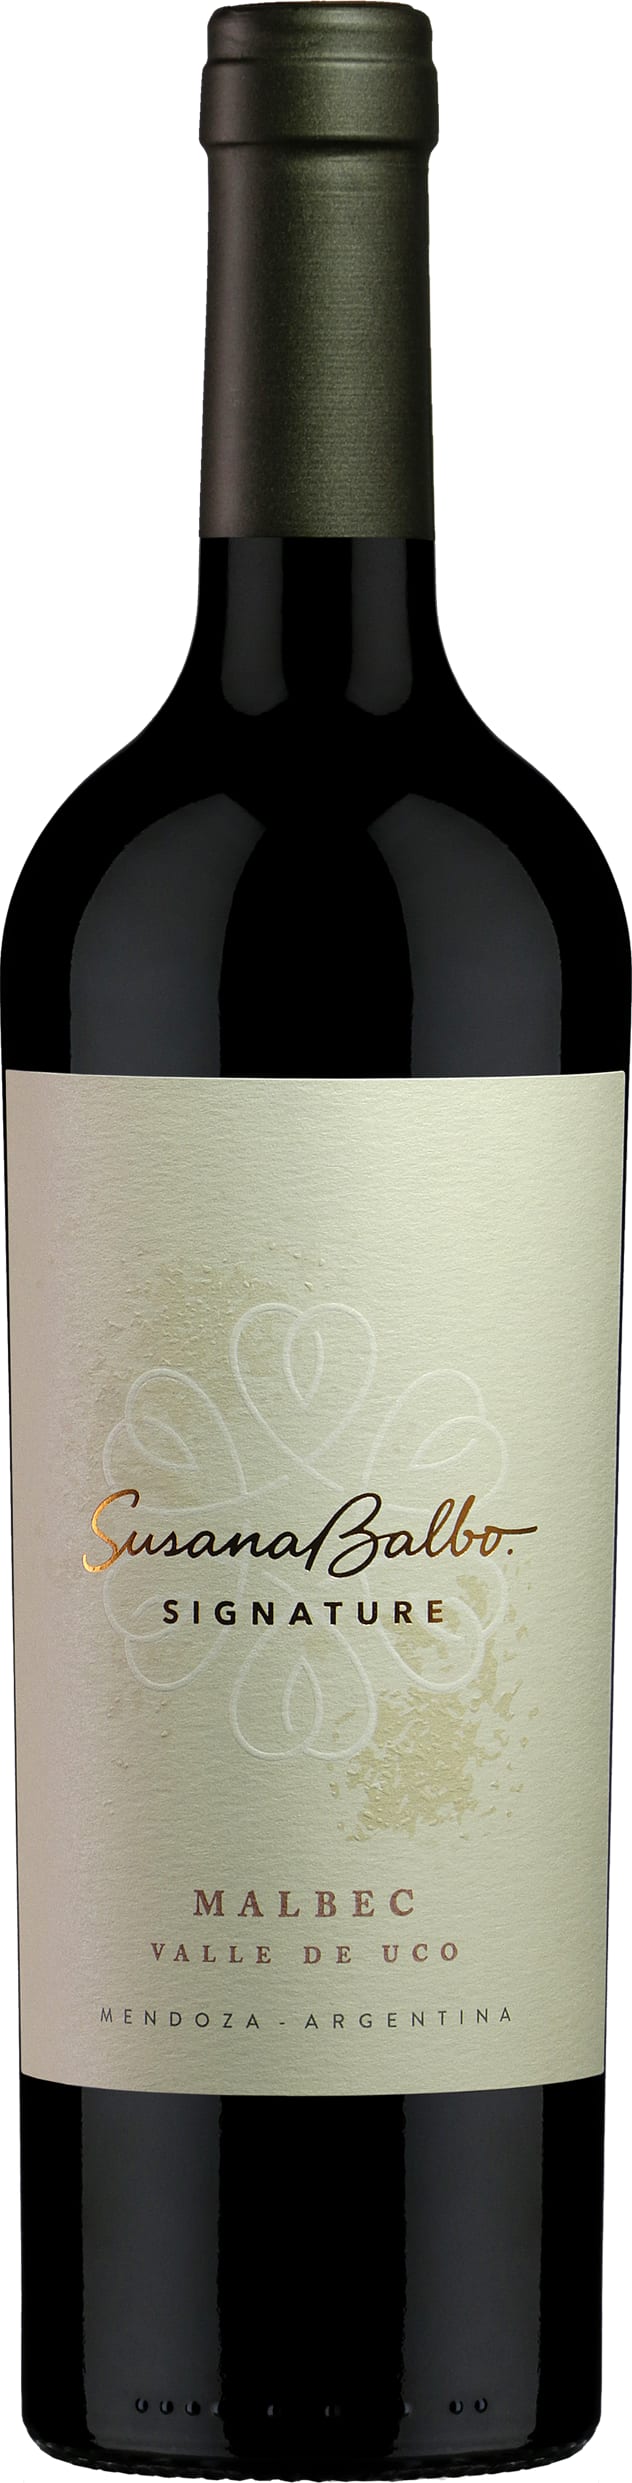 Susana Balbo Signature Malbec 2022 75cl - Buy Susana Balbo Wines from GREAT WINES DIRECT wine shop